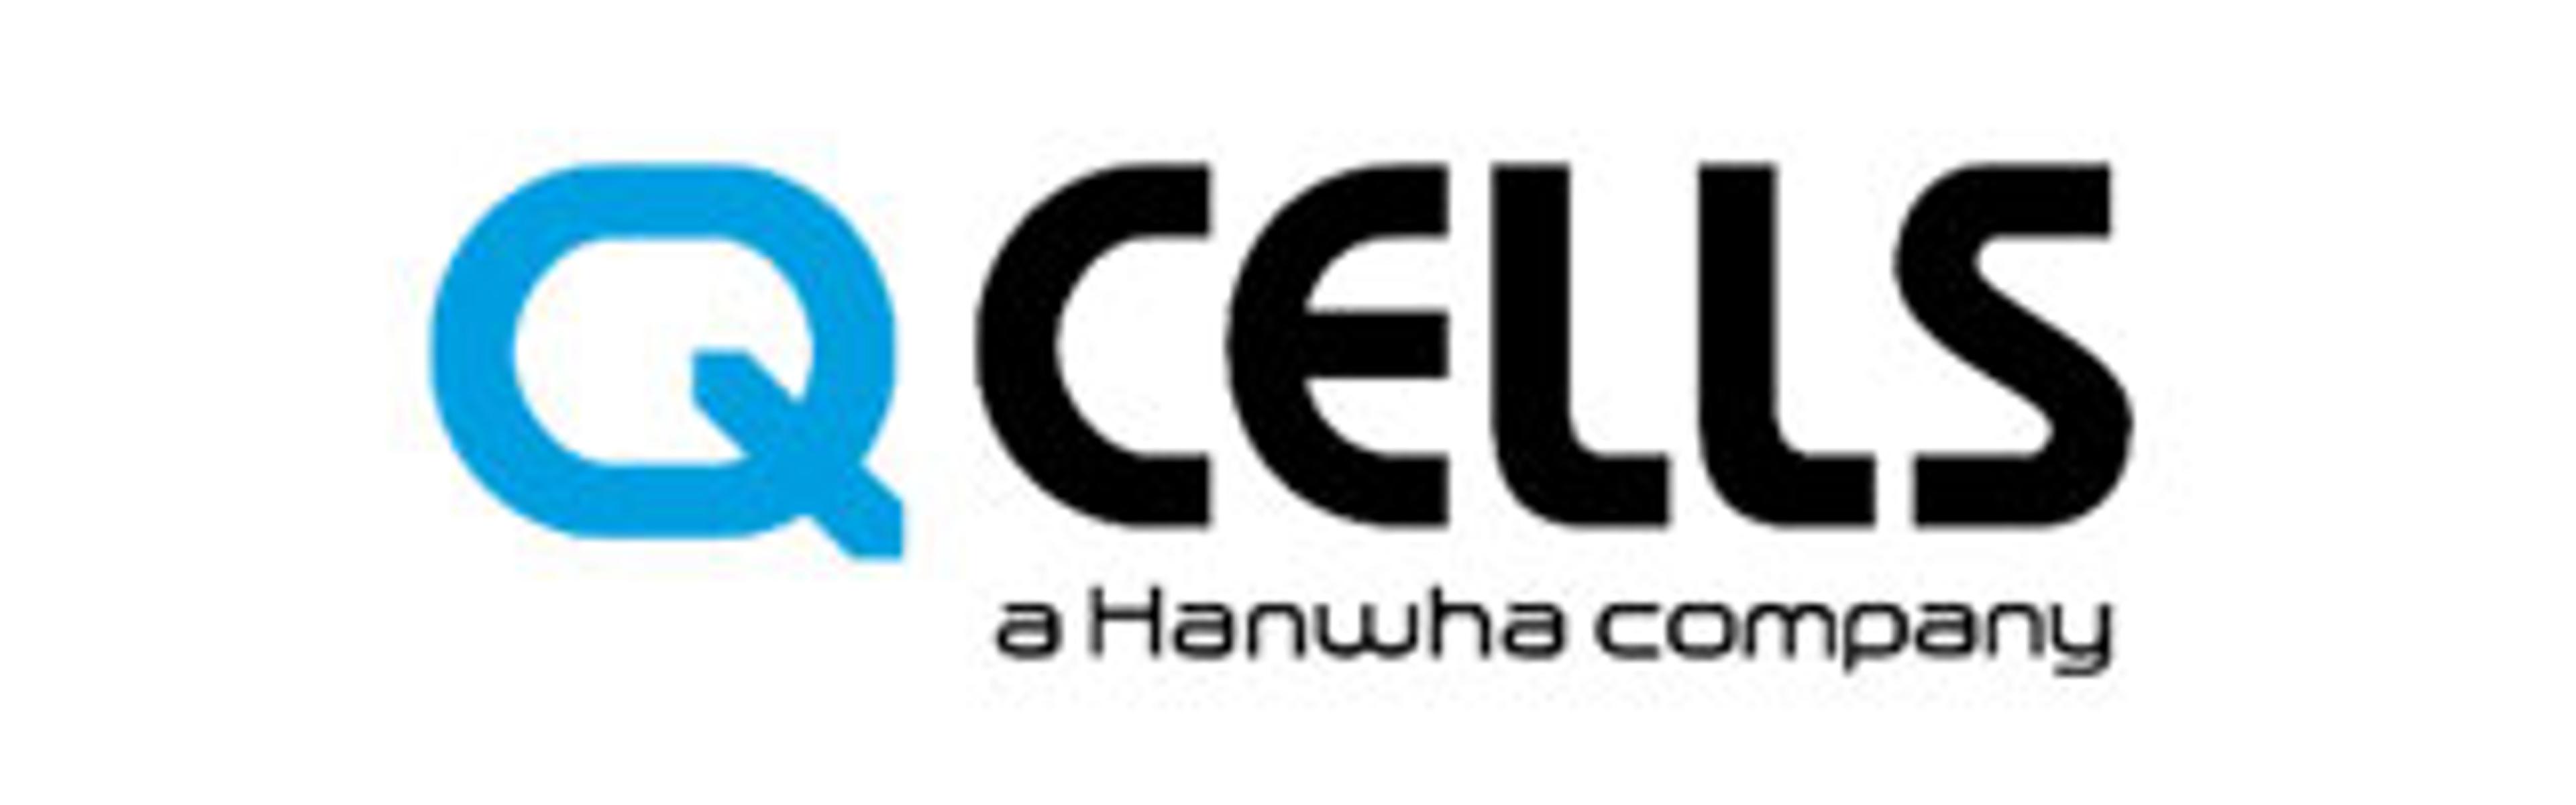 Logo QCells